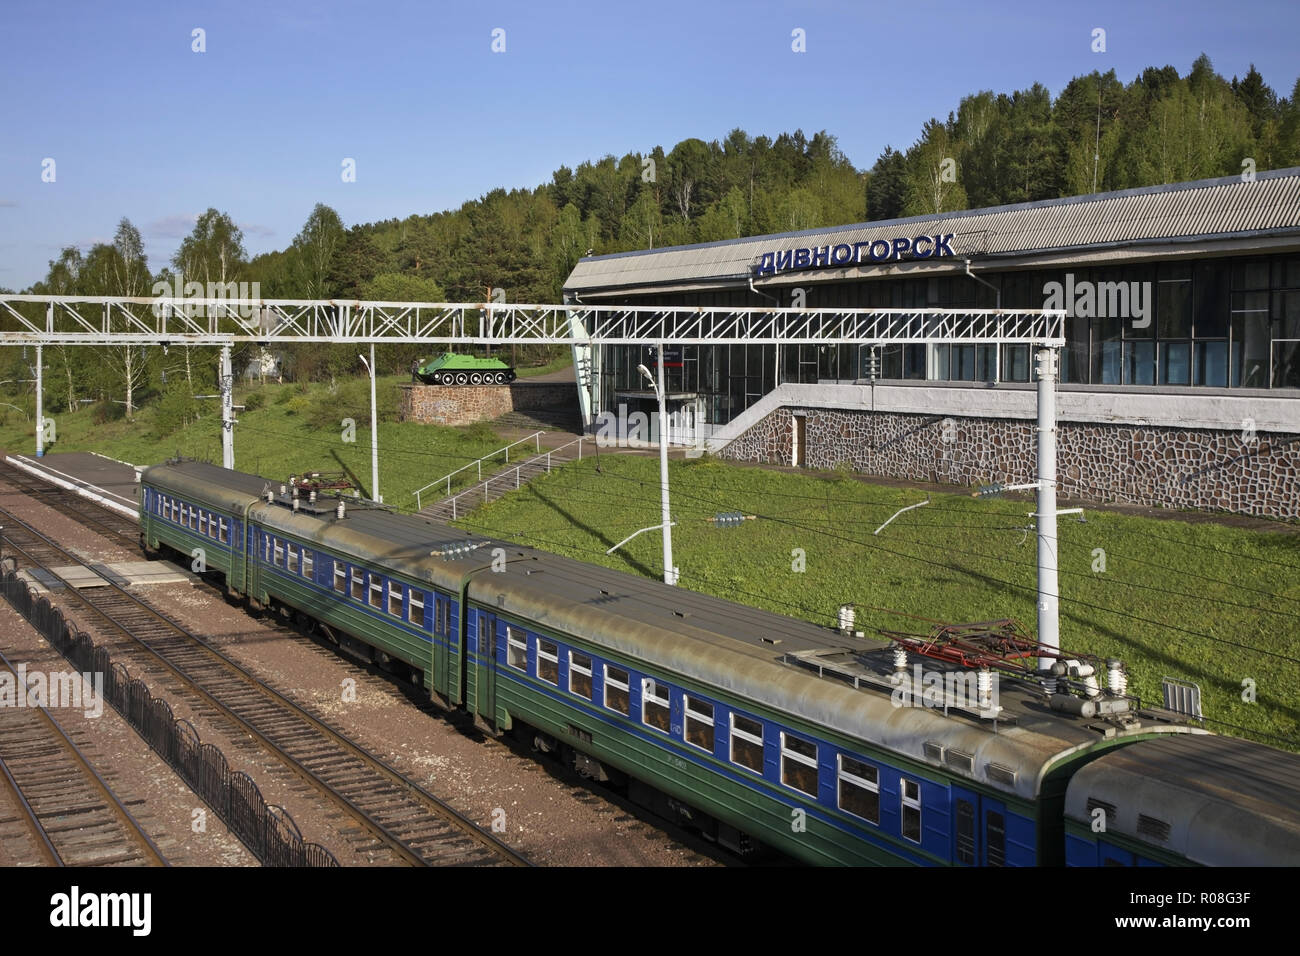 Stazione ferroviaria di Divnogorsk. Krasnoyarsk krai. La Russia Foto Stock